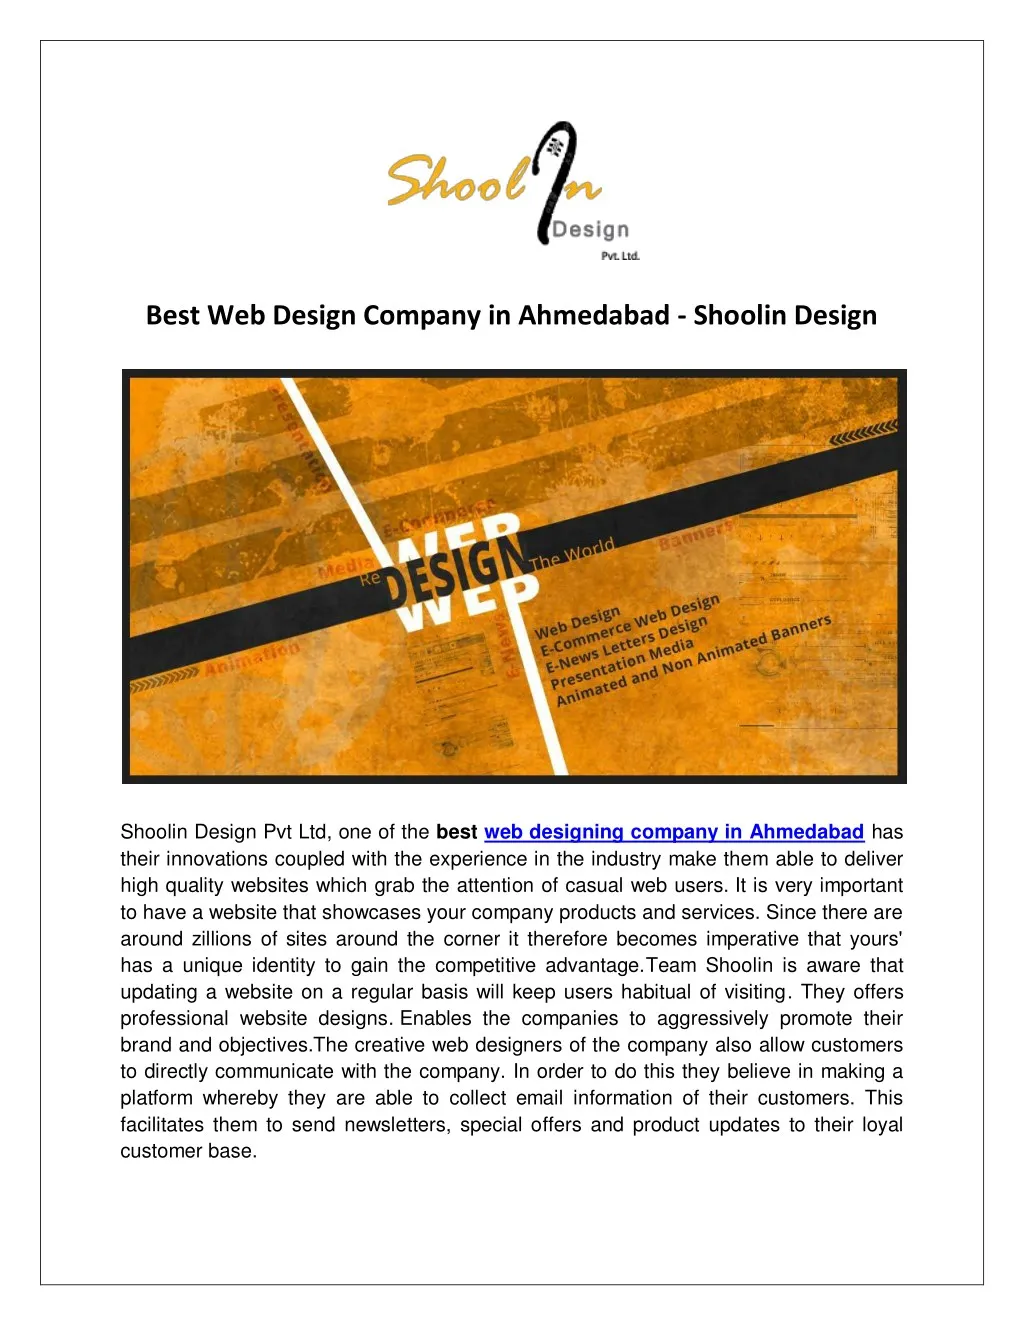 best web design company in ahmedabad shoolin